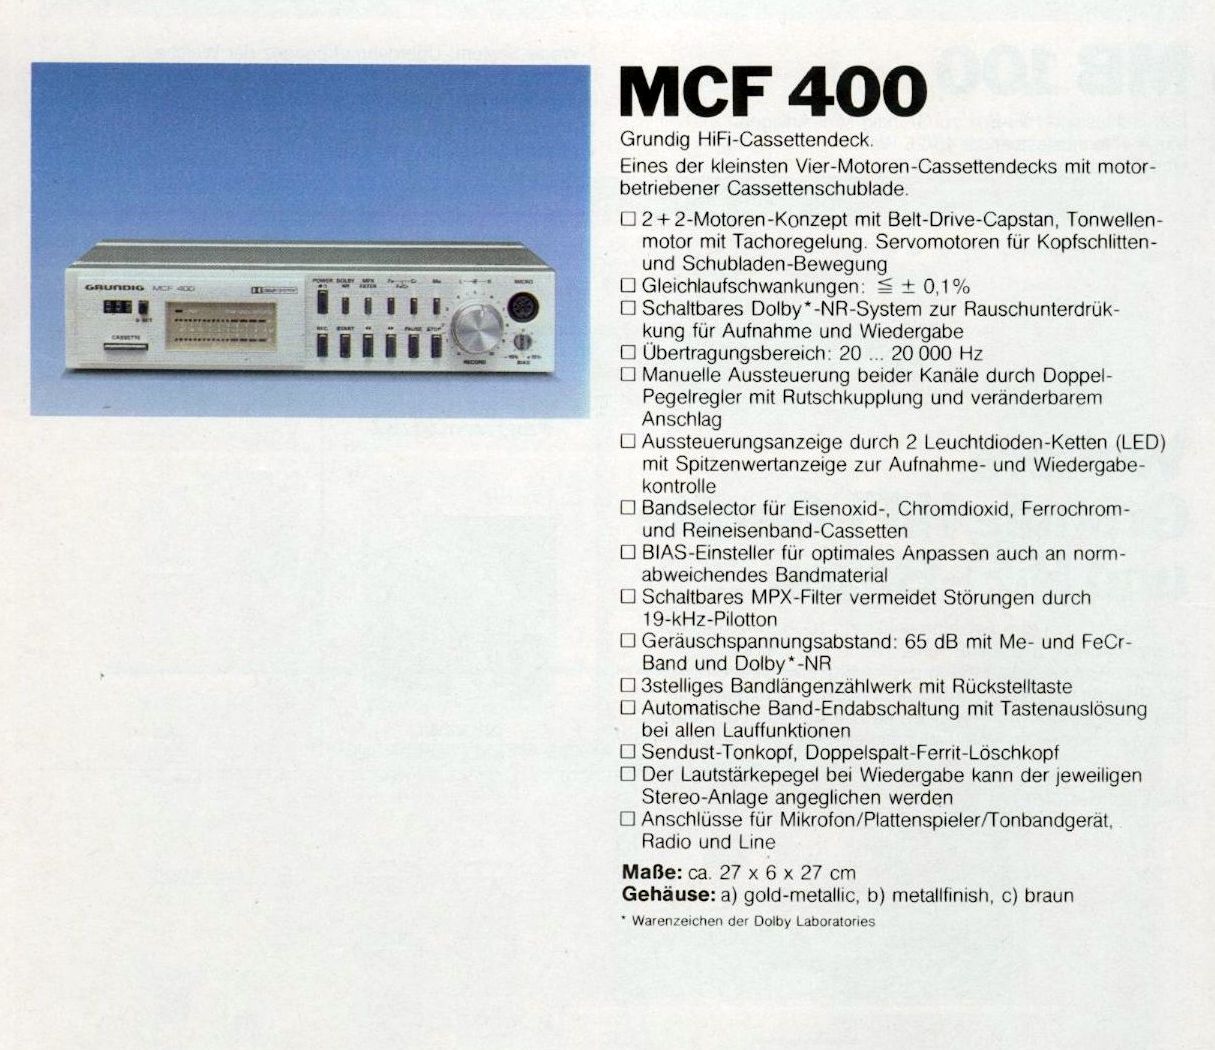 Grundig MCF-400 Mini-Prospekt-1.jpg